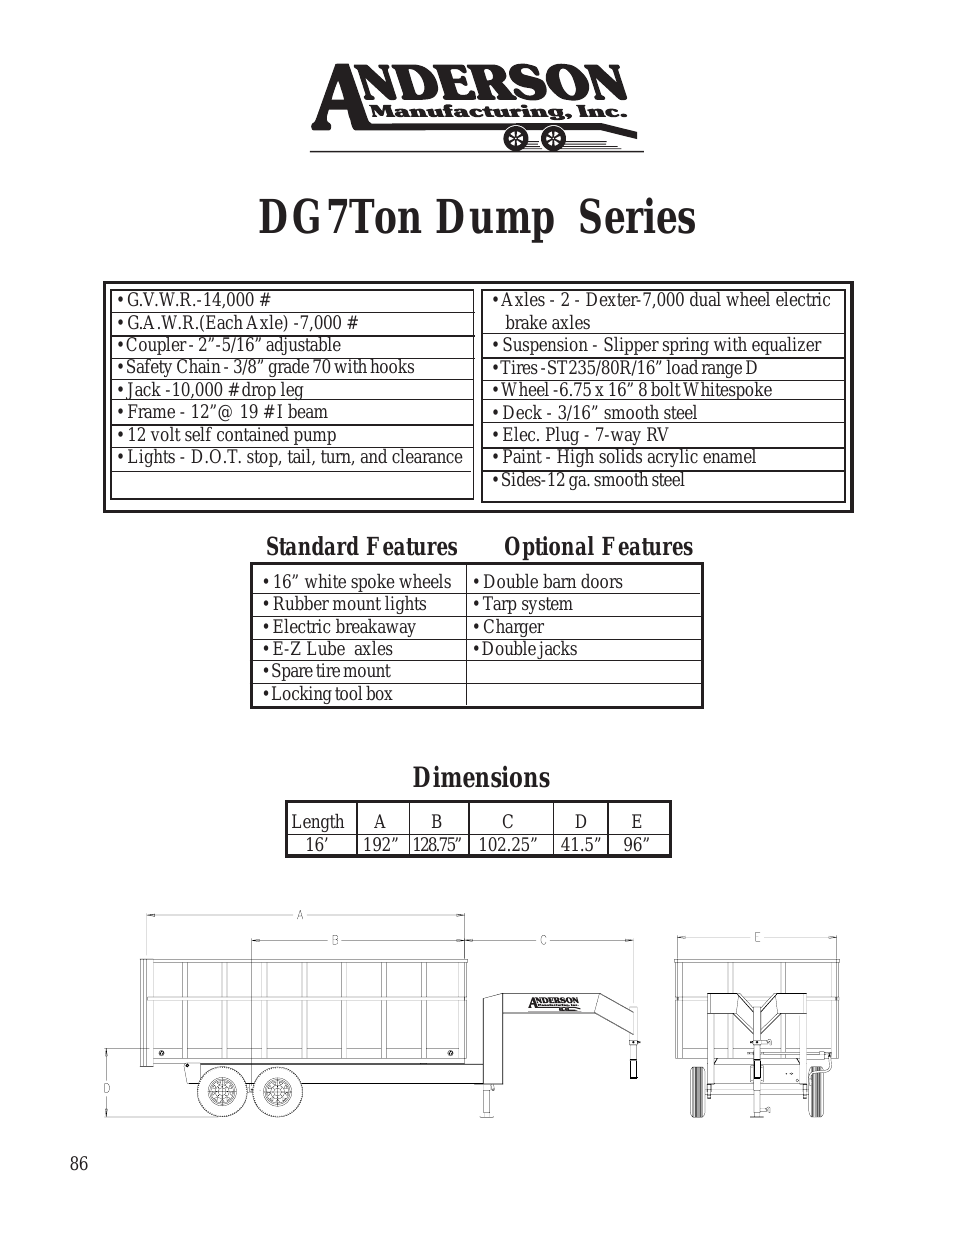 Dump Series DG7Ton